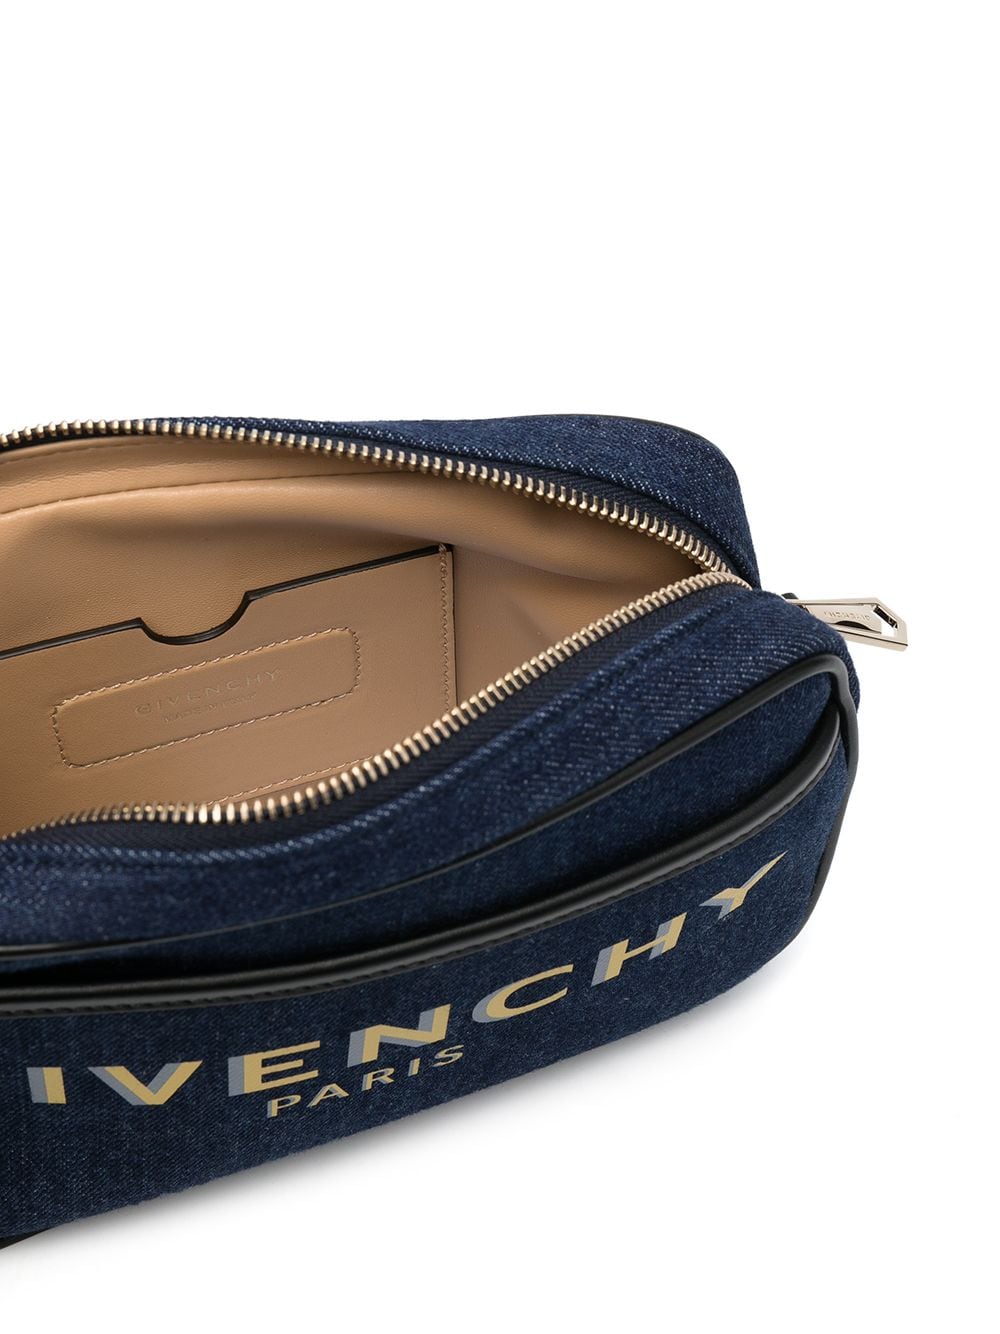 фото Givenchy сумка через плечо с логотипом